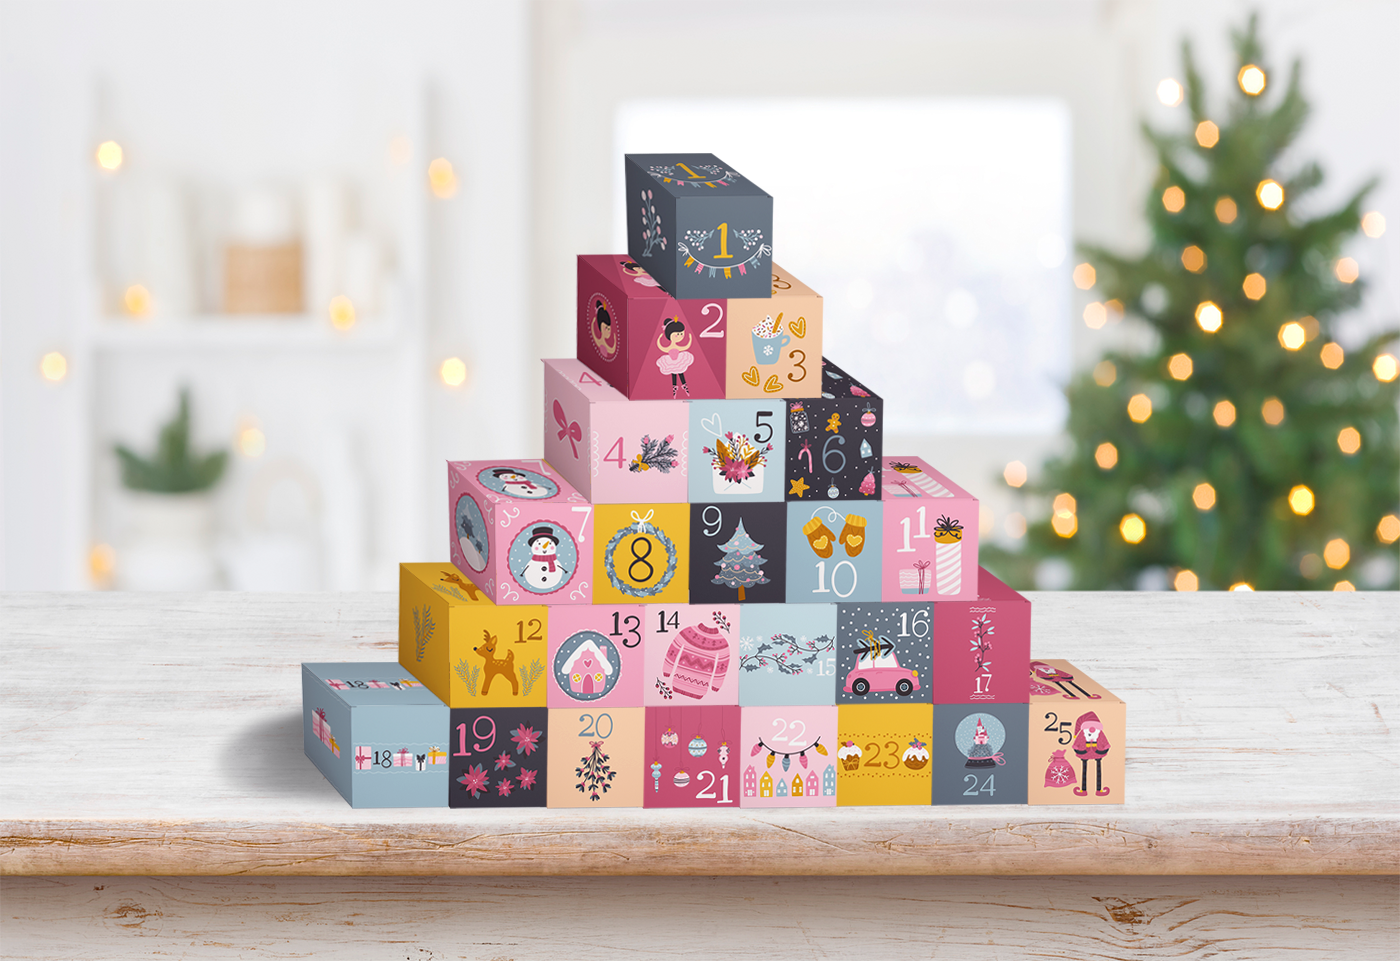 25 Days of Christmas Advent Calendar Printable Boxes – Free Templates